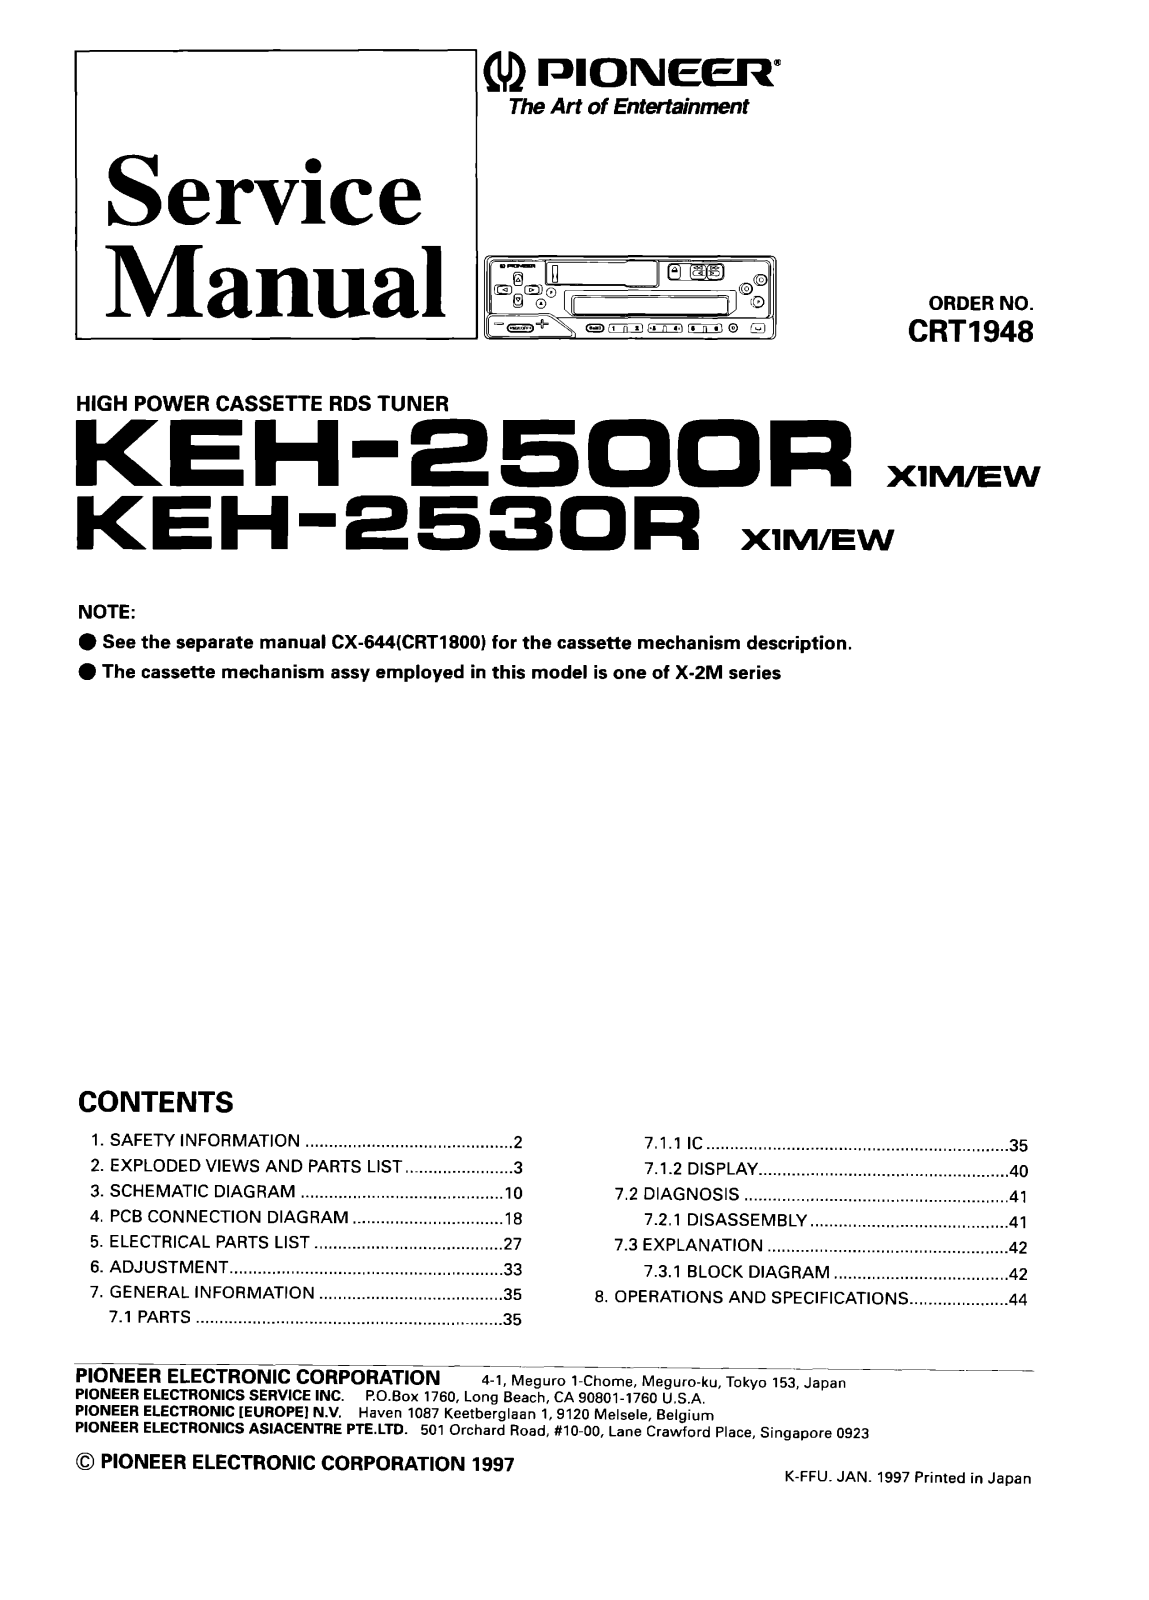 PIONEER KEH-2500R X1M/EW, KEH-2530R X1M/EW Service Manual